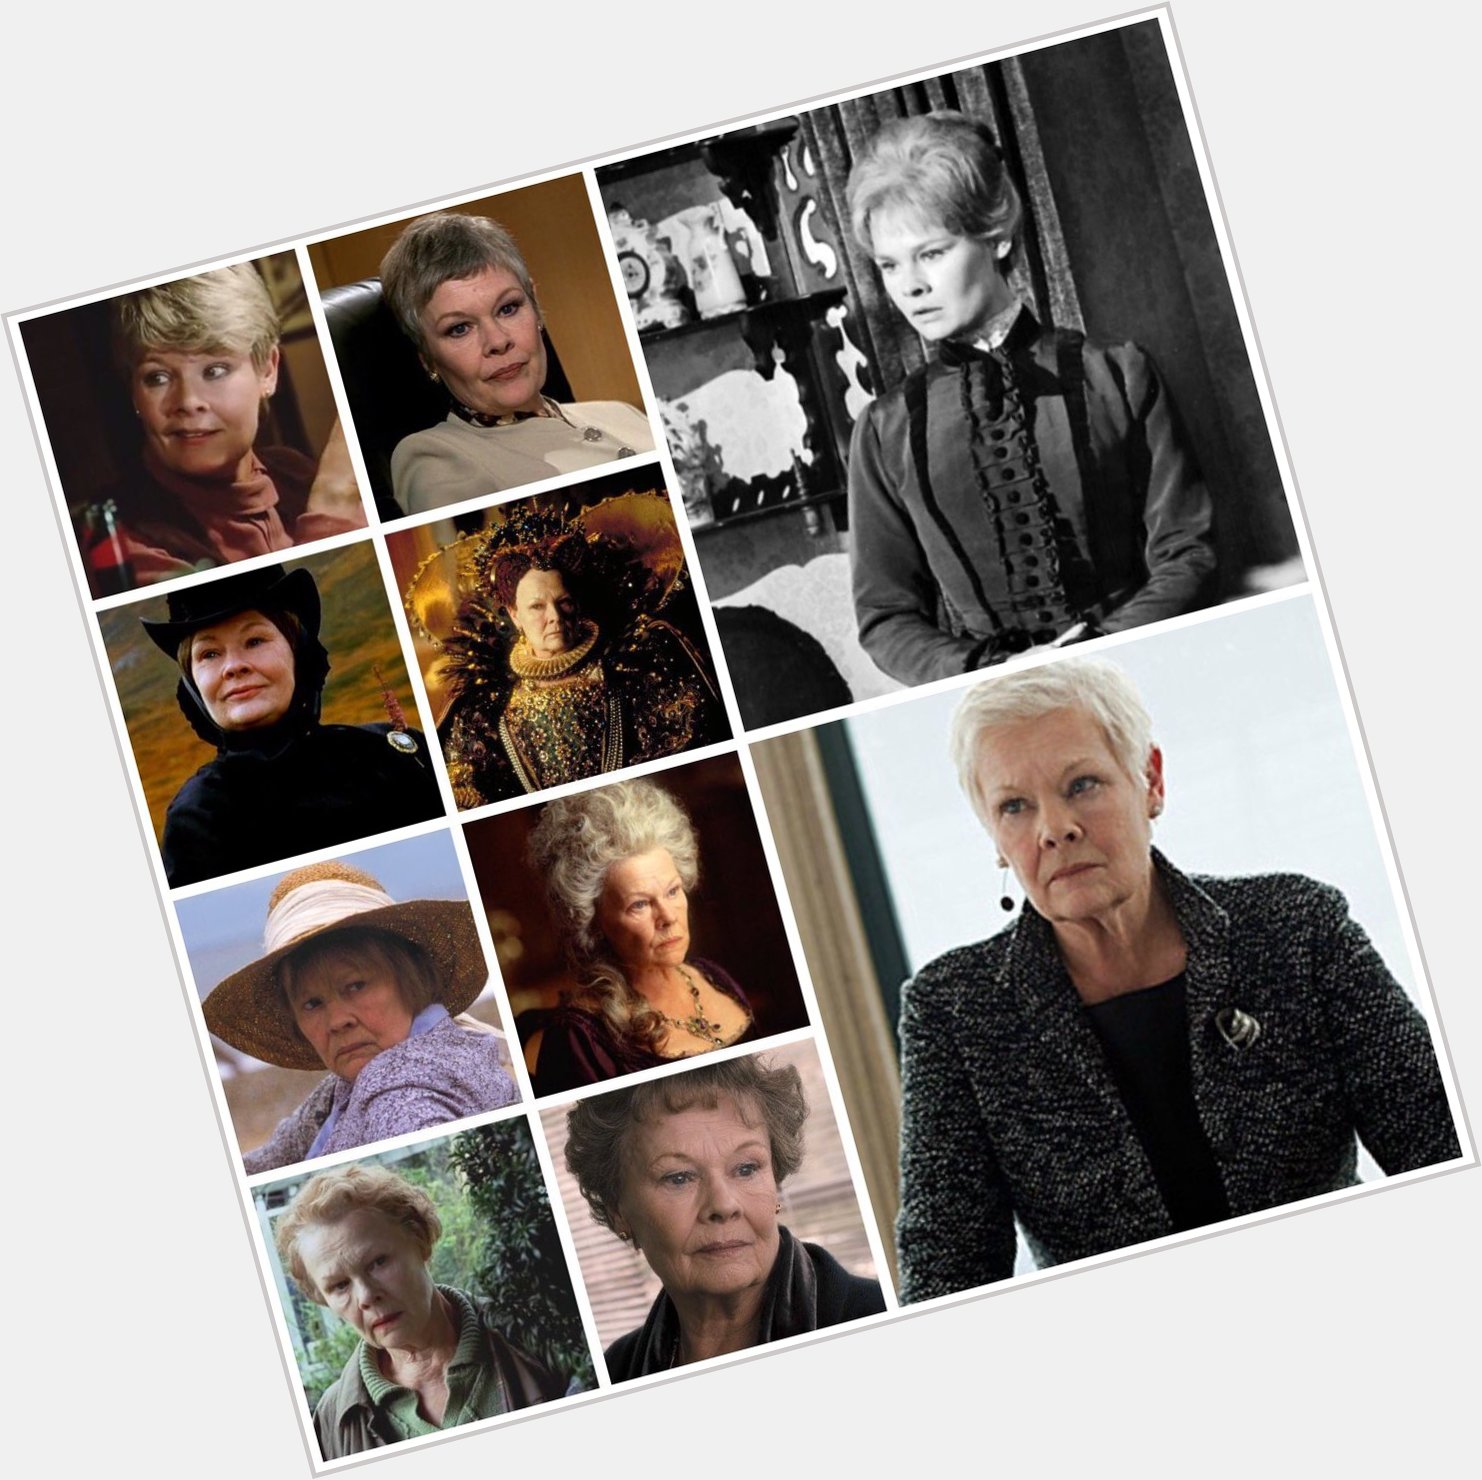 Happy 83rd birthday, Dame Judi Dench! A bonafide national treasure. 